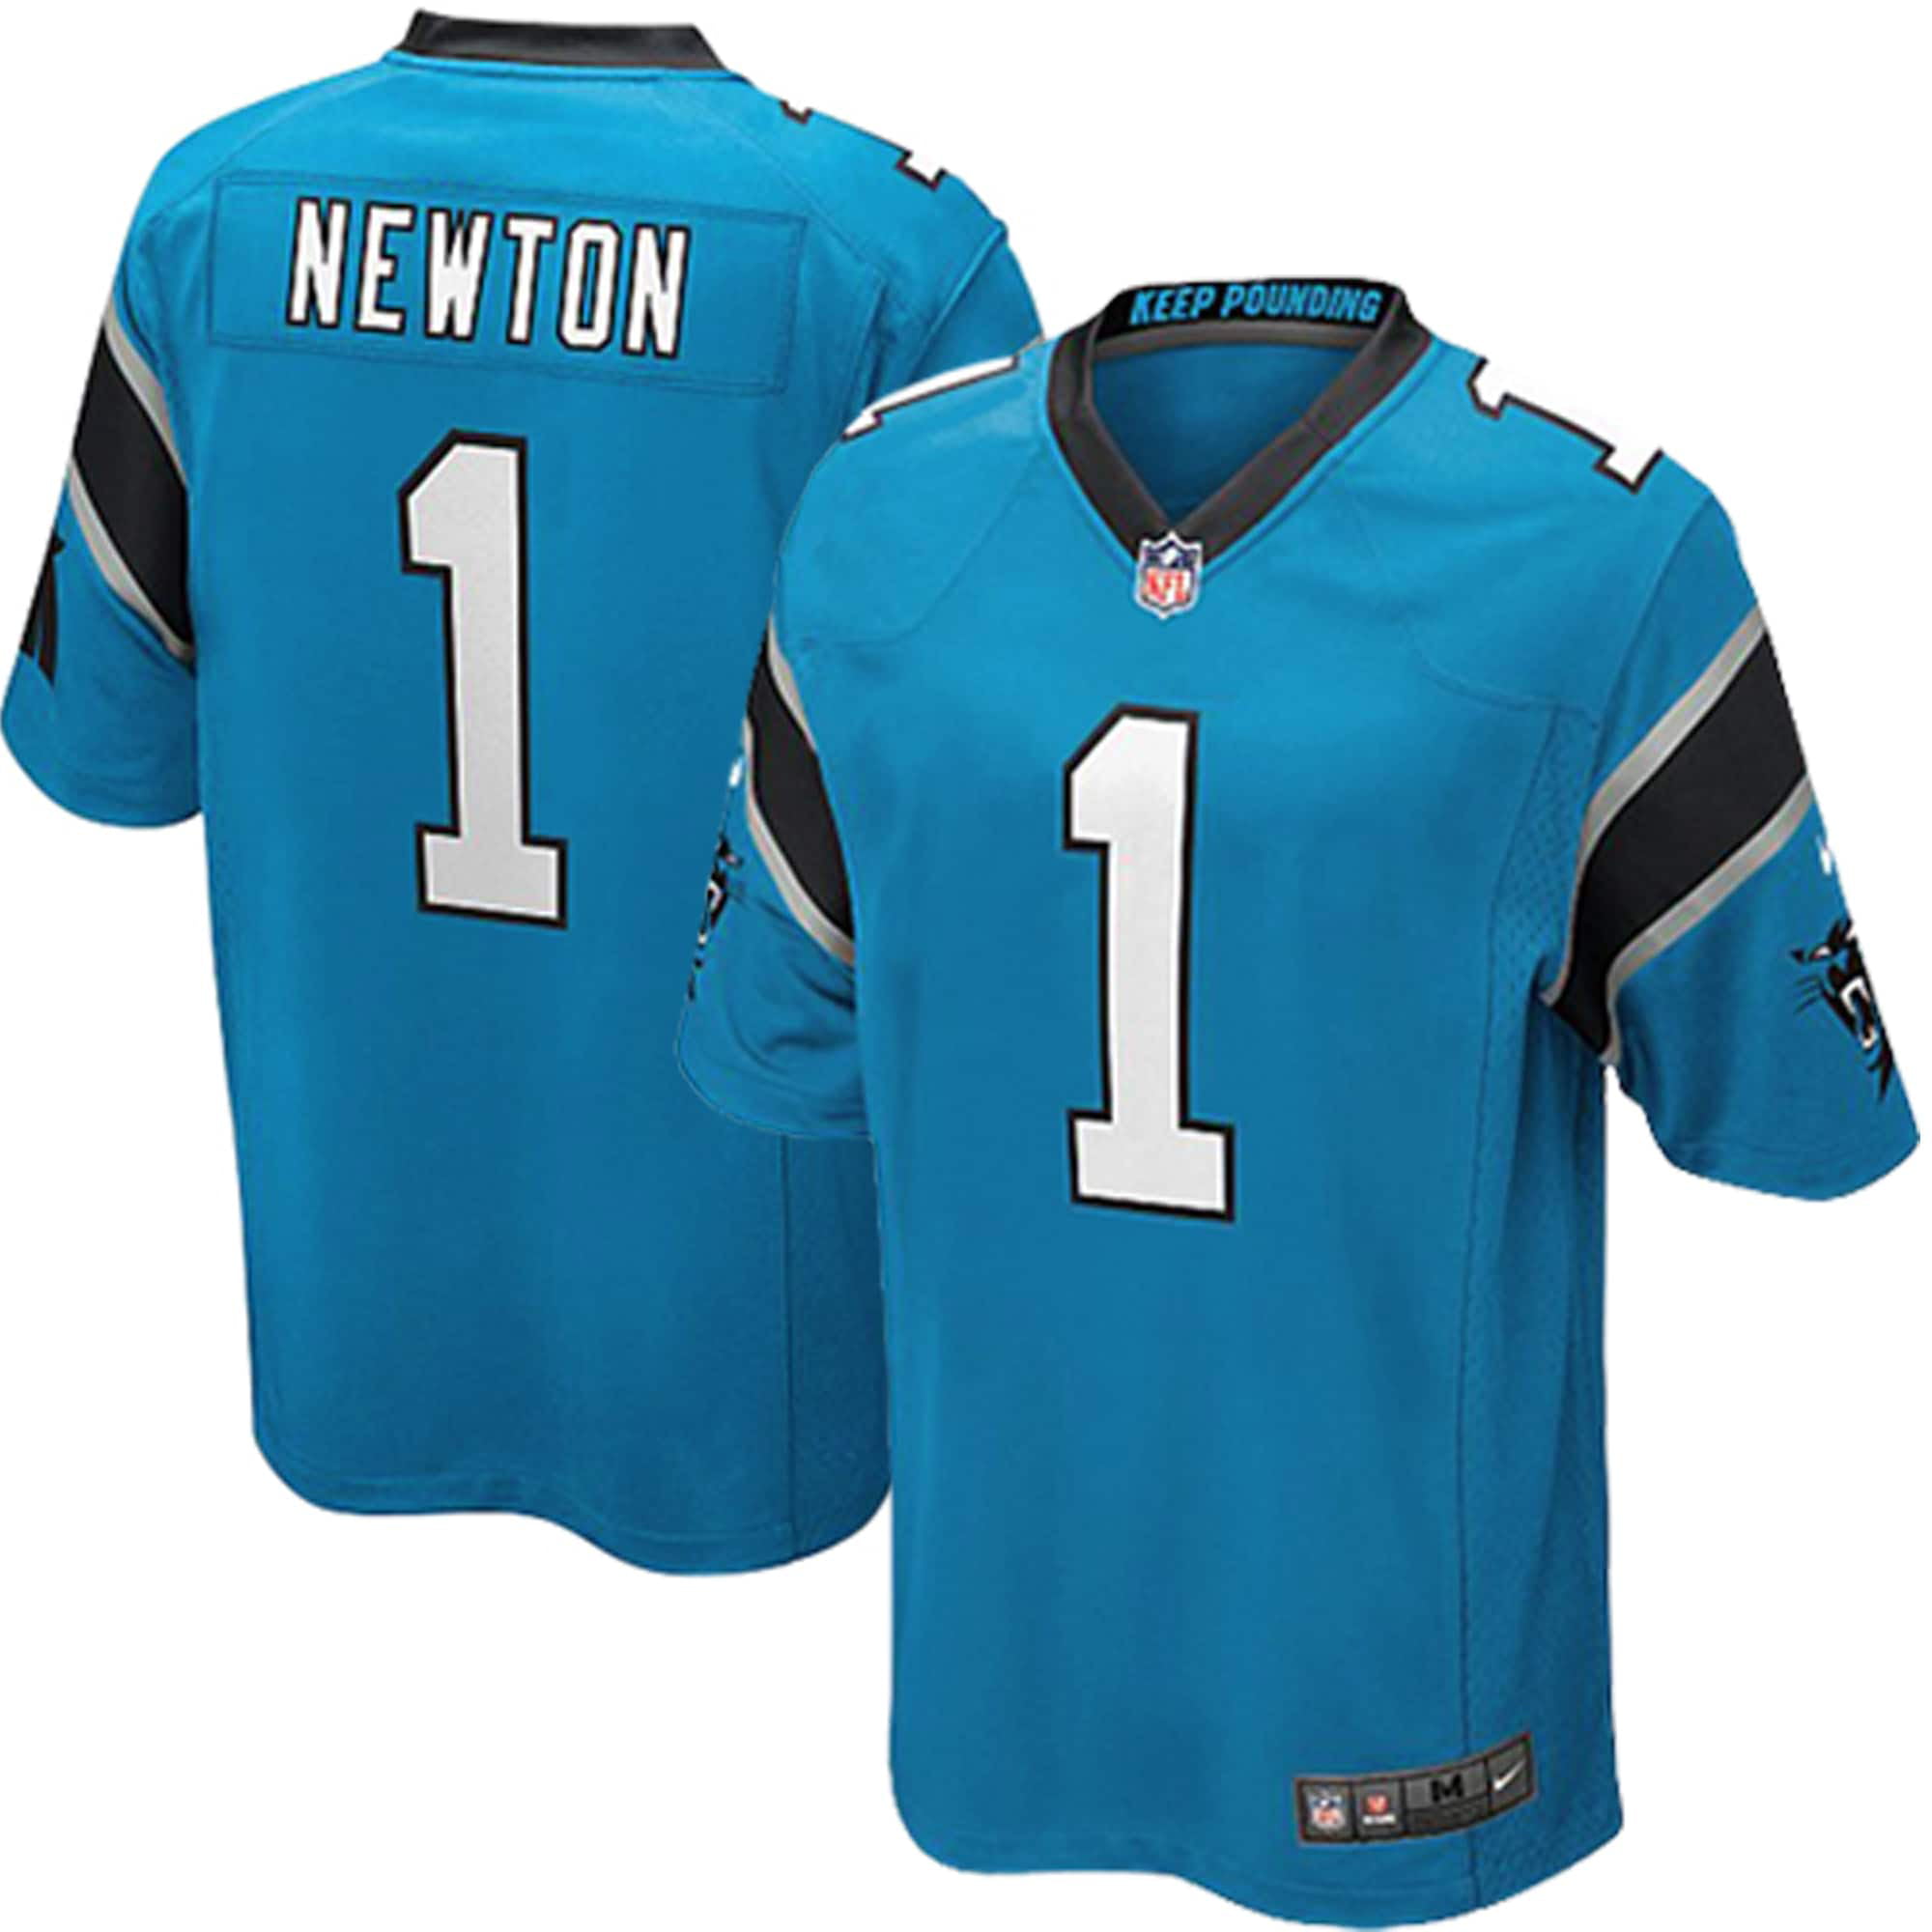 cam newton number jersey